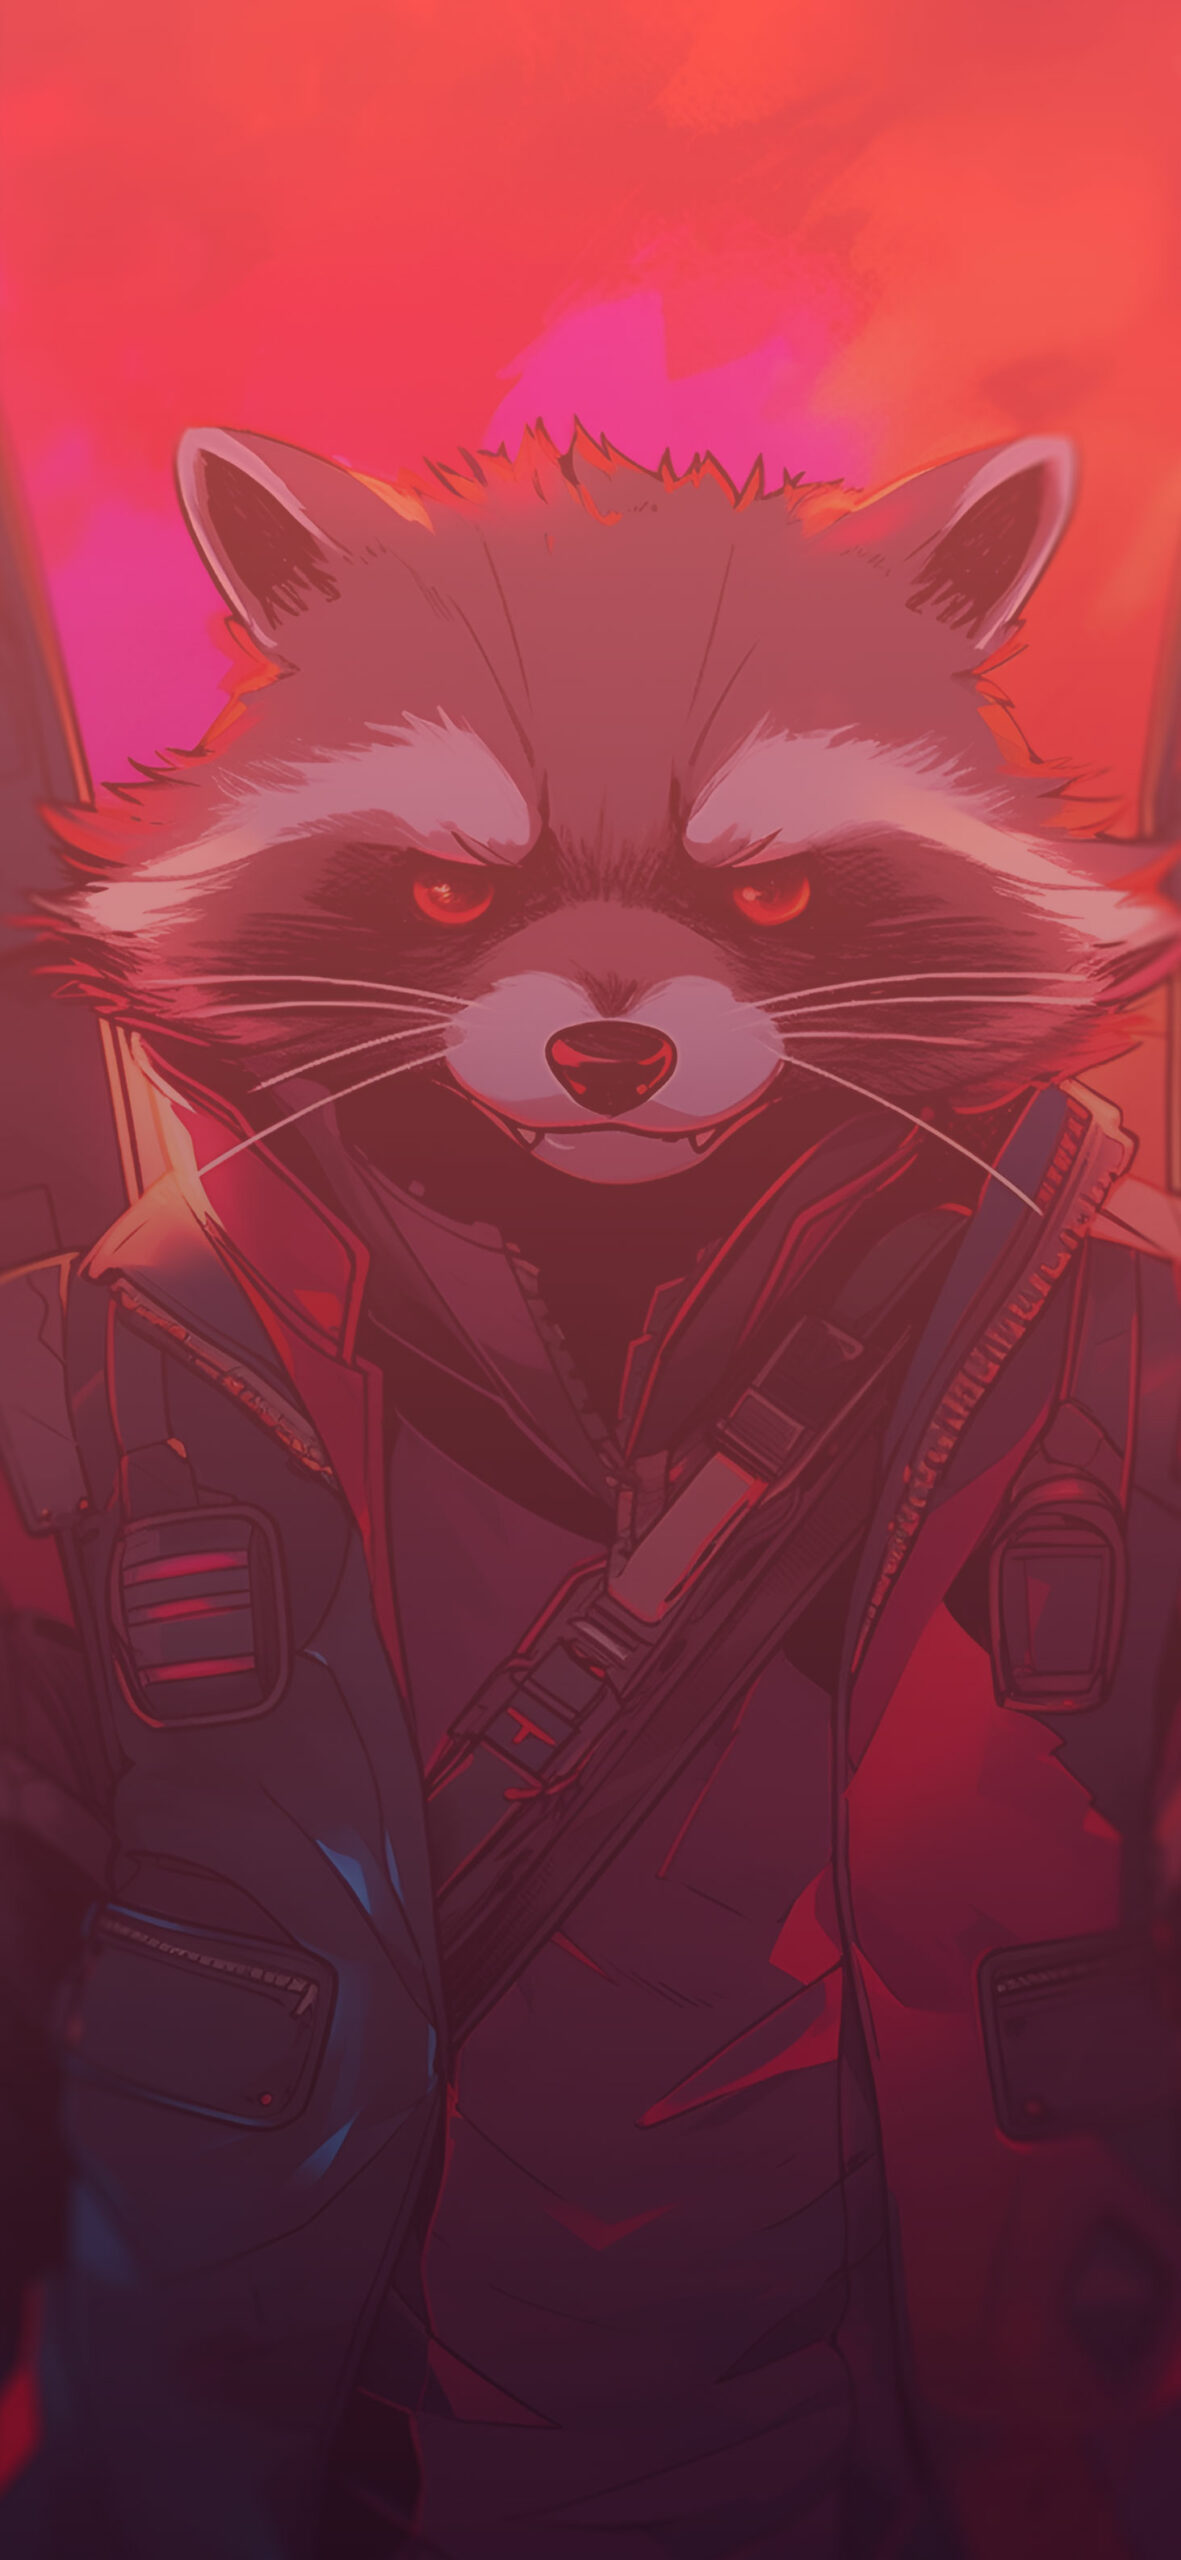 Guardians of the galaxy rocket raccoon cool wallpaper Marvel a